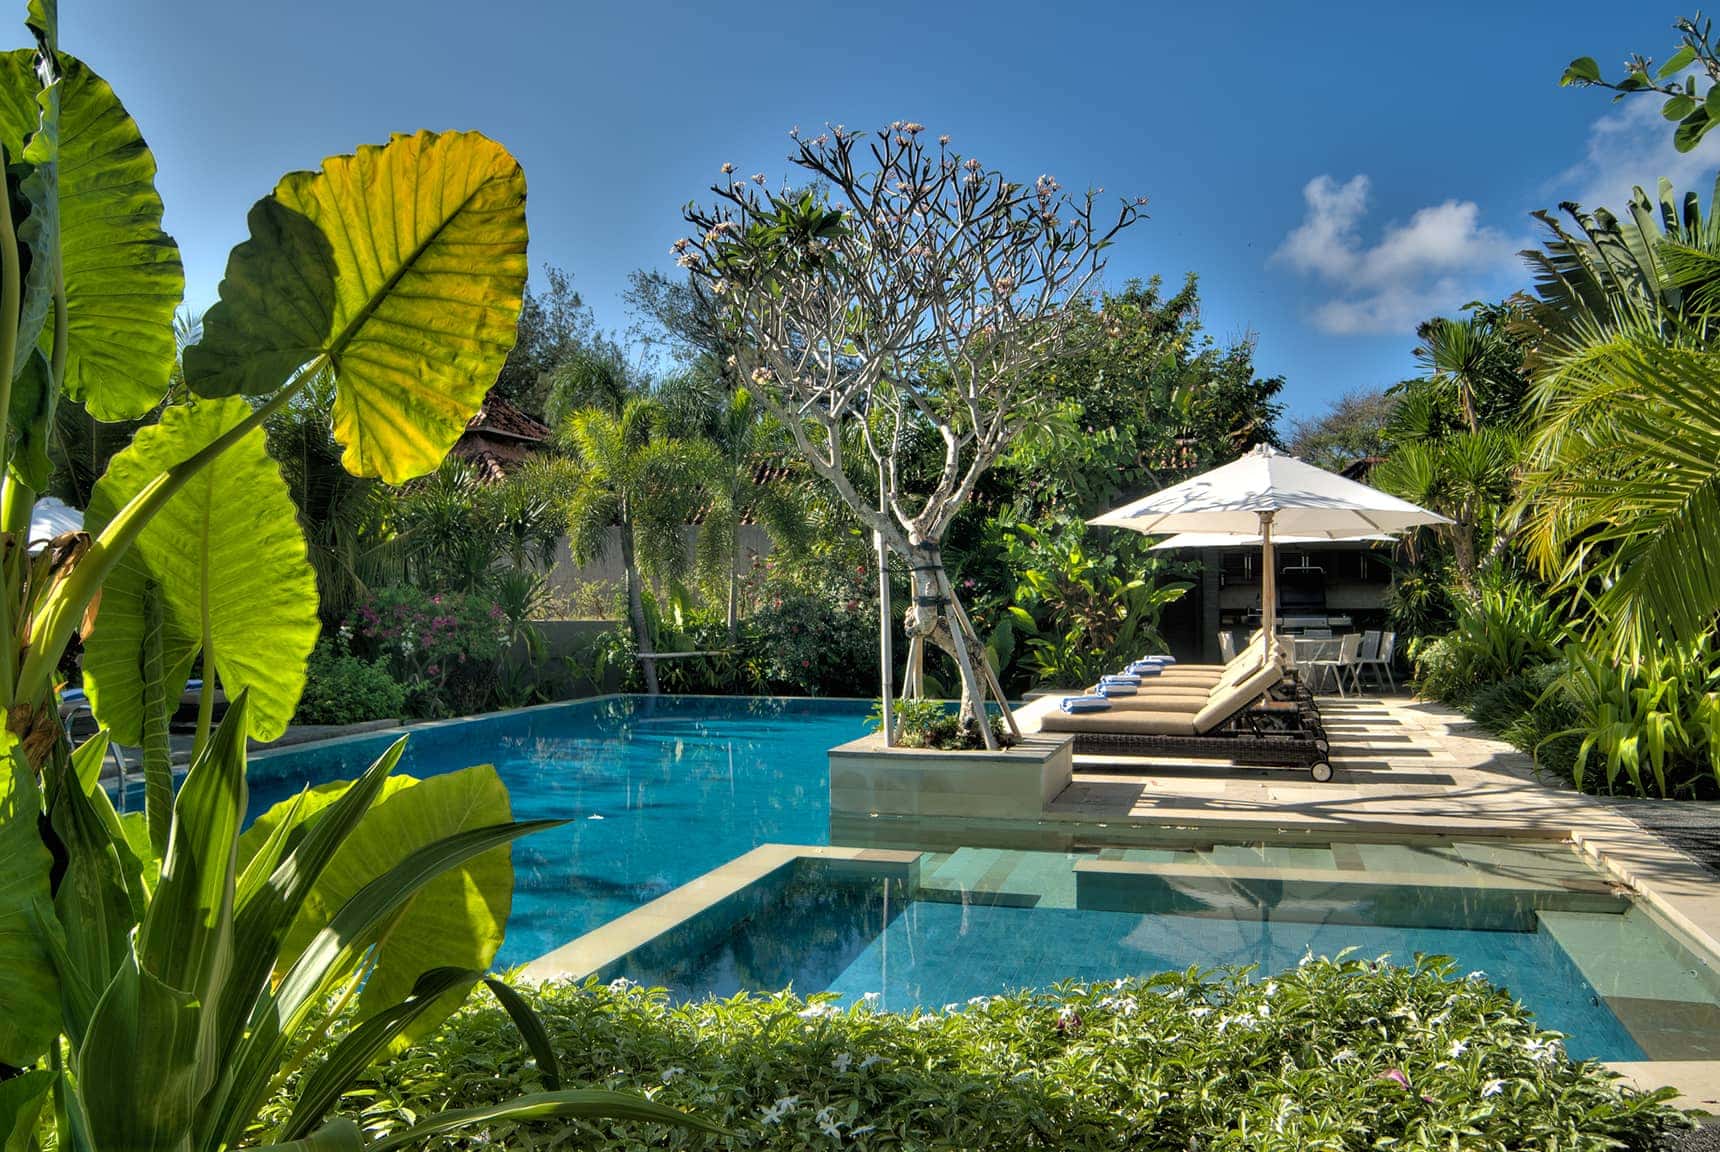 Villa Kejora - Sanur, Bali Indonesia (Bali villa photography by master photographer Rick Carmichael of LuxViz)